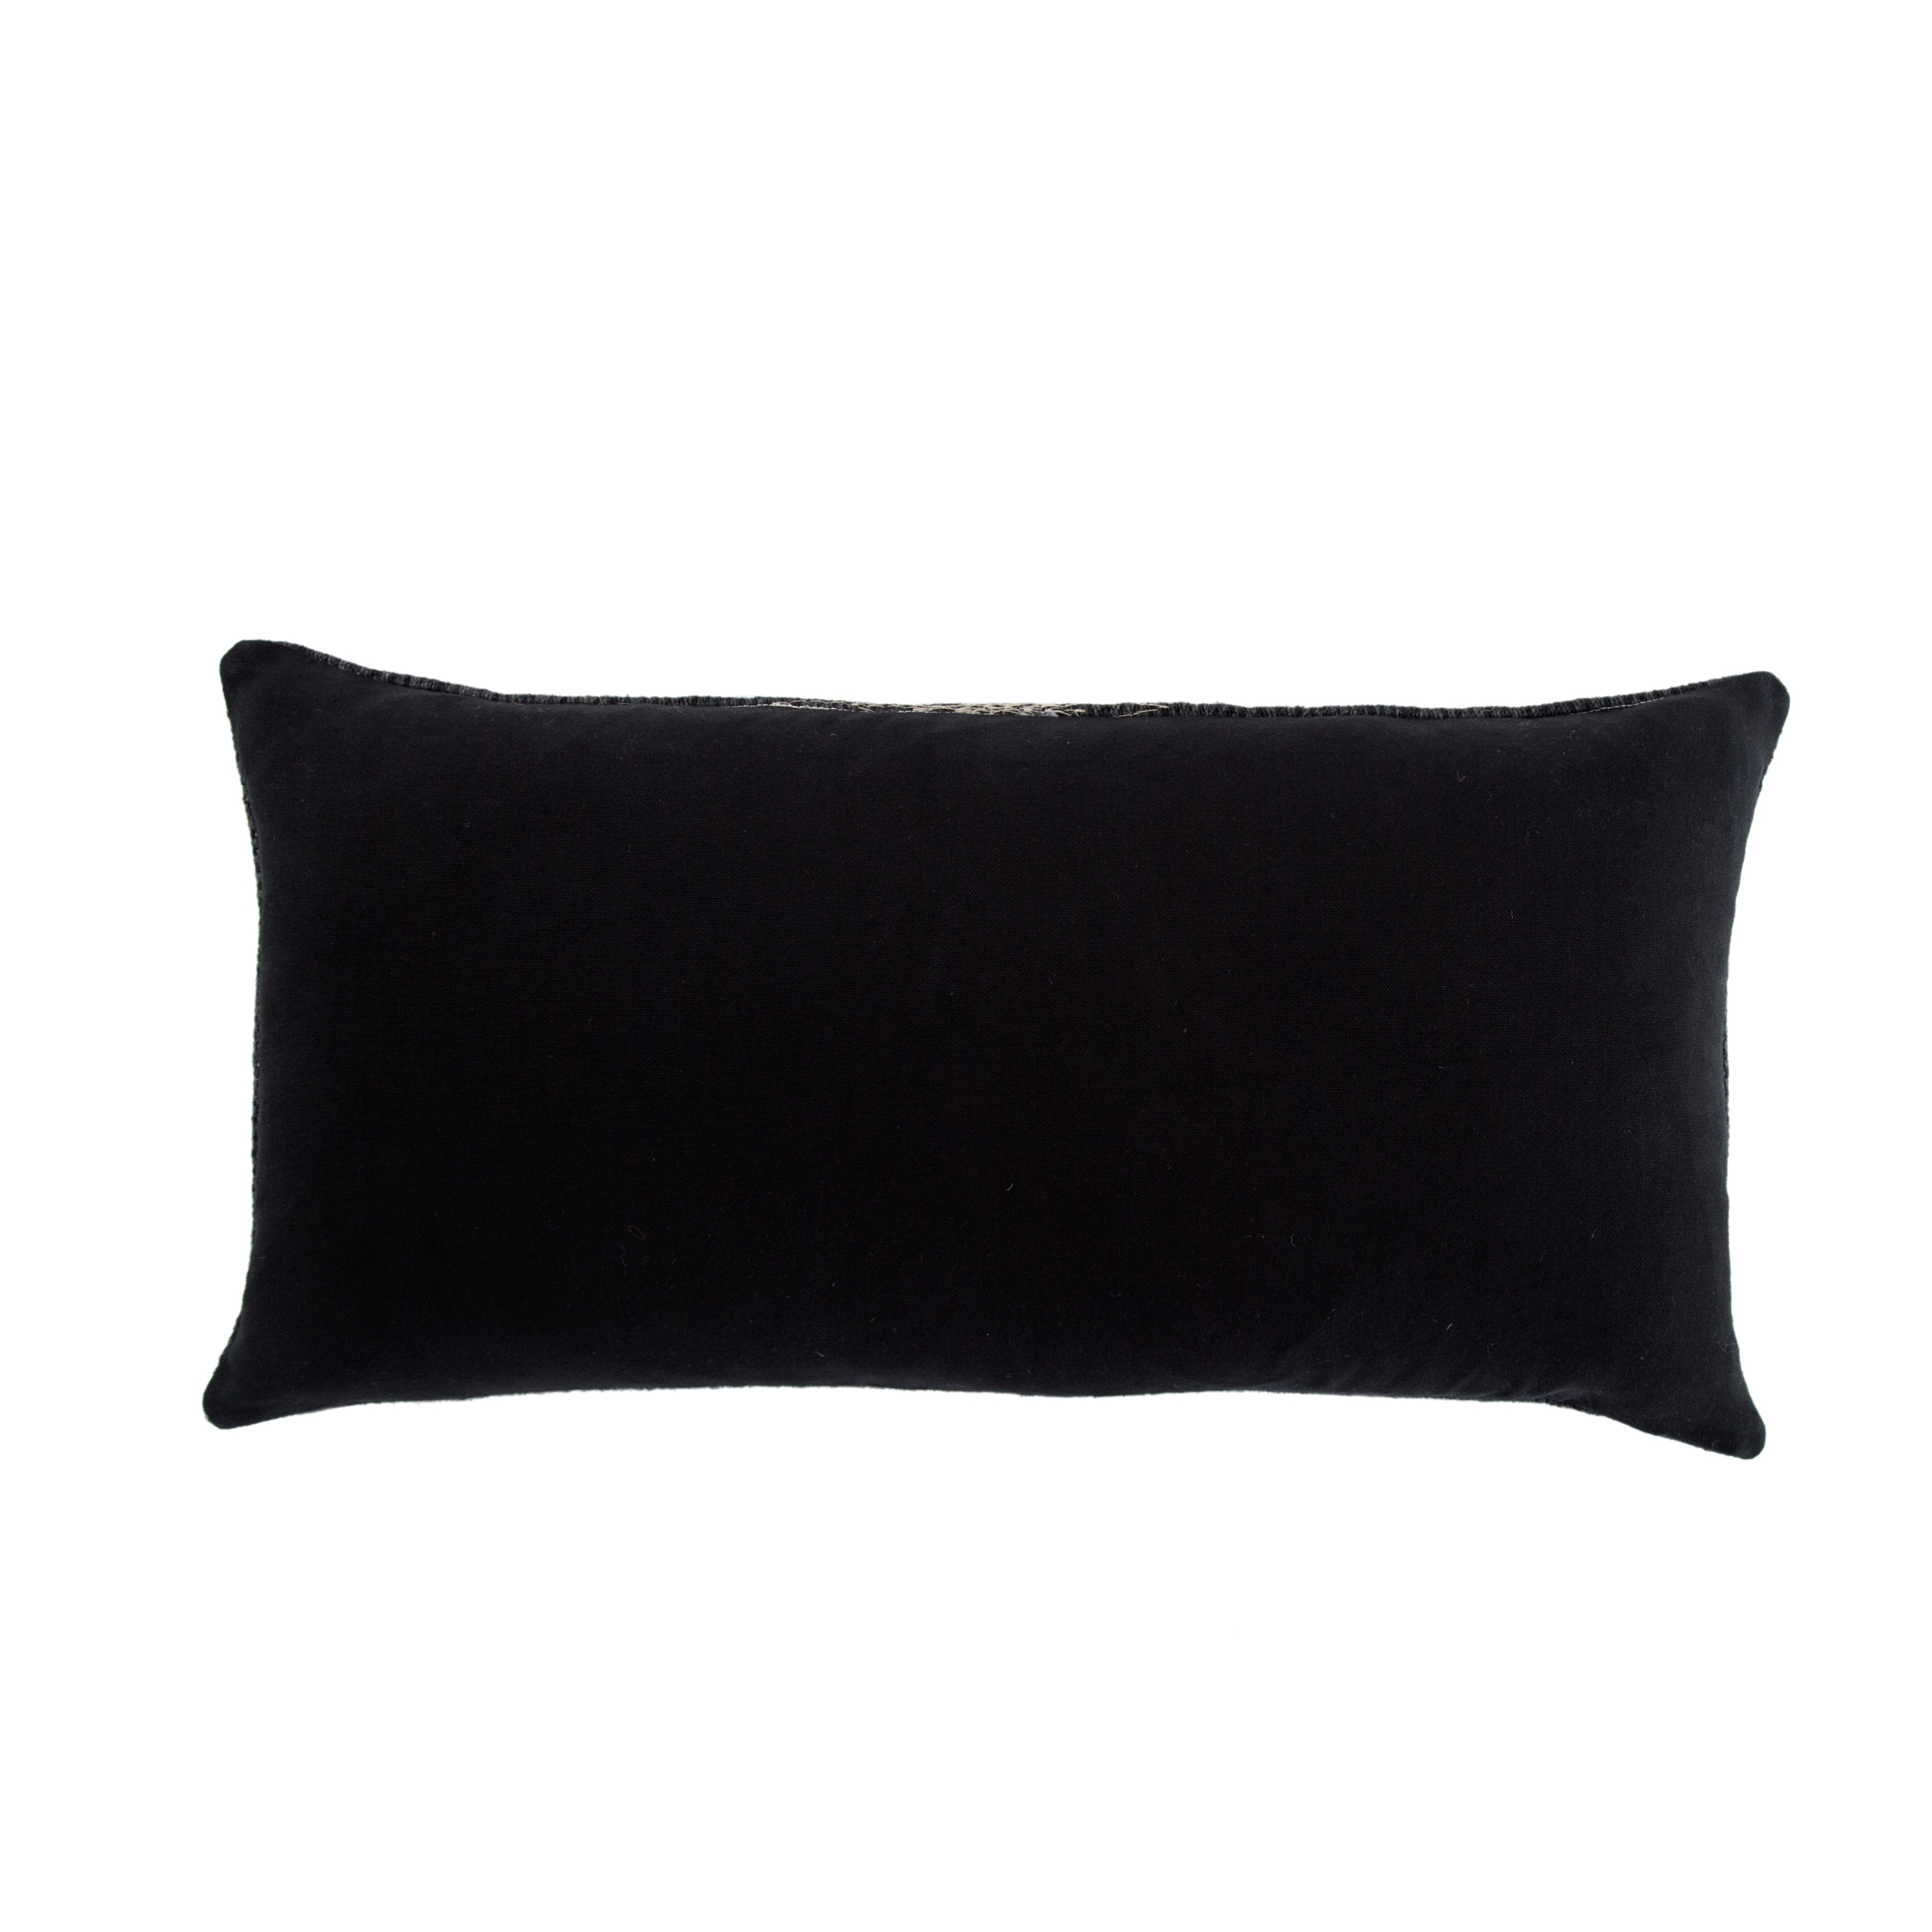 Design (US) Black 12"X24" Pillow - Image 1